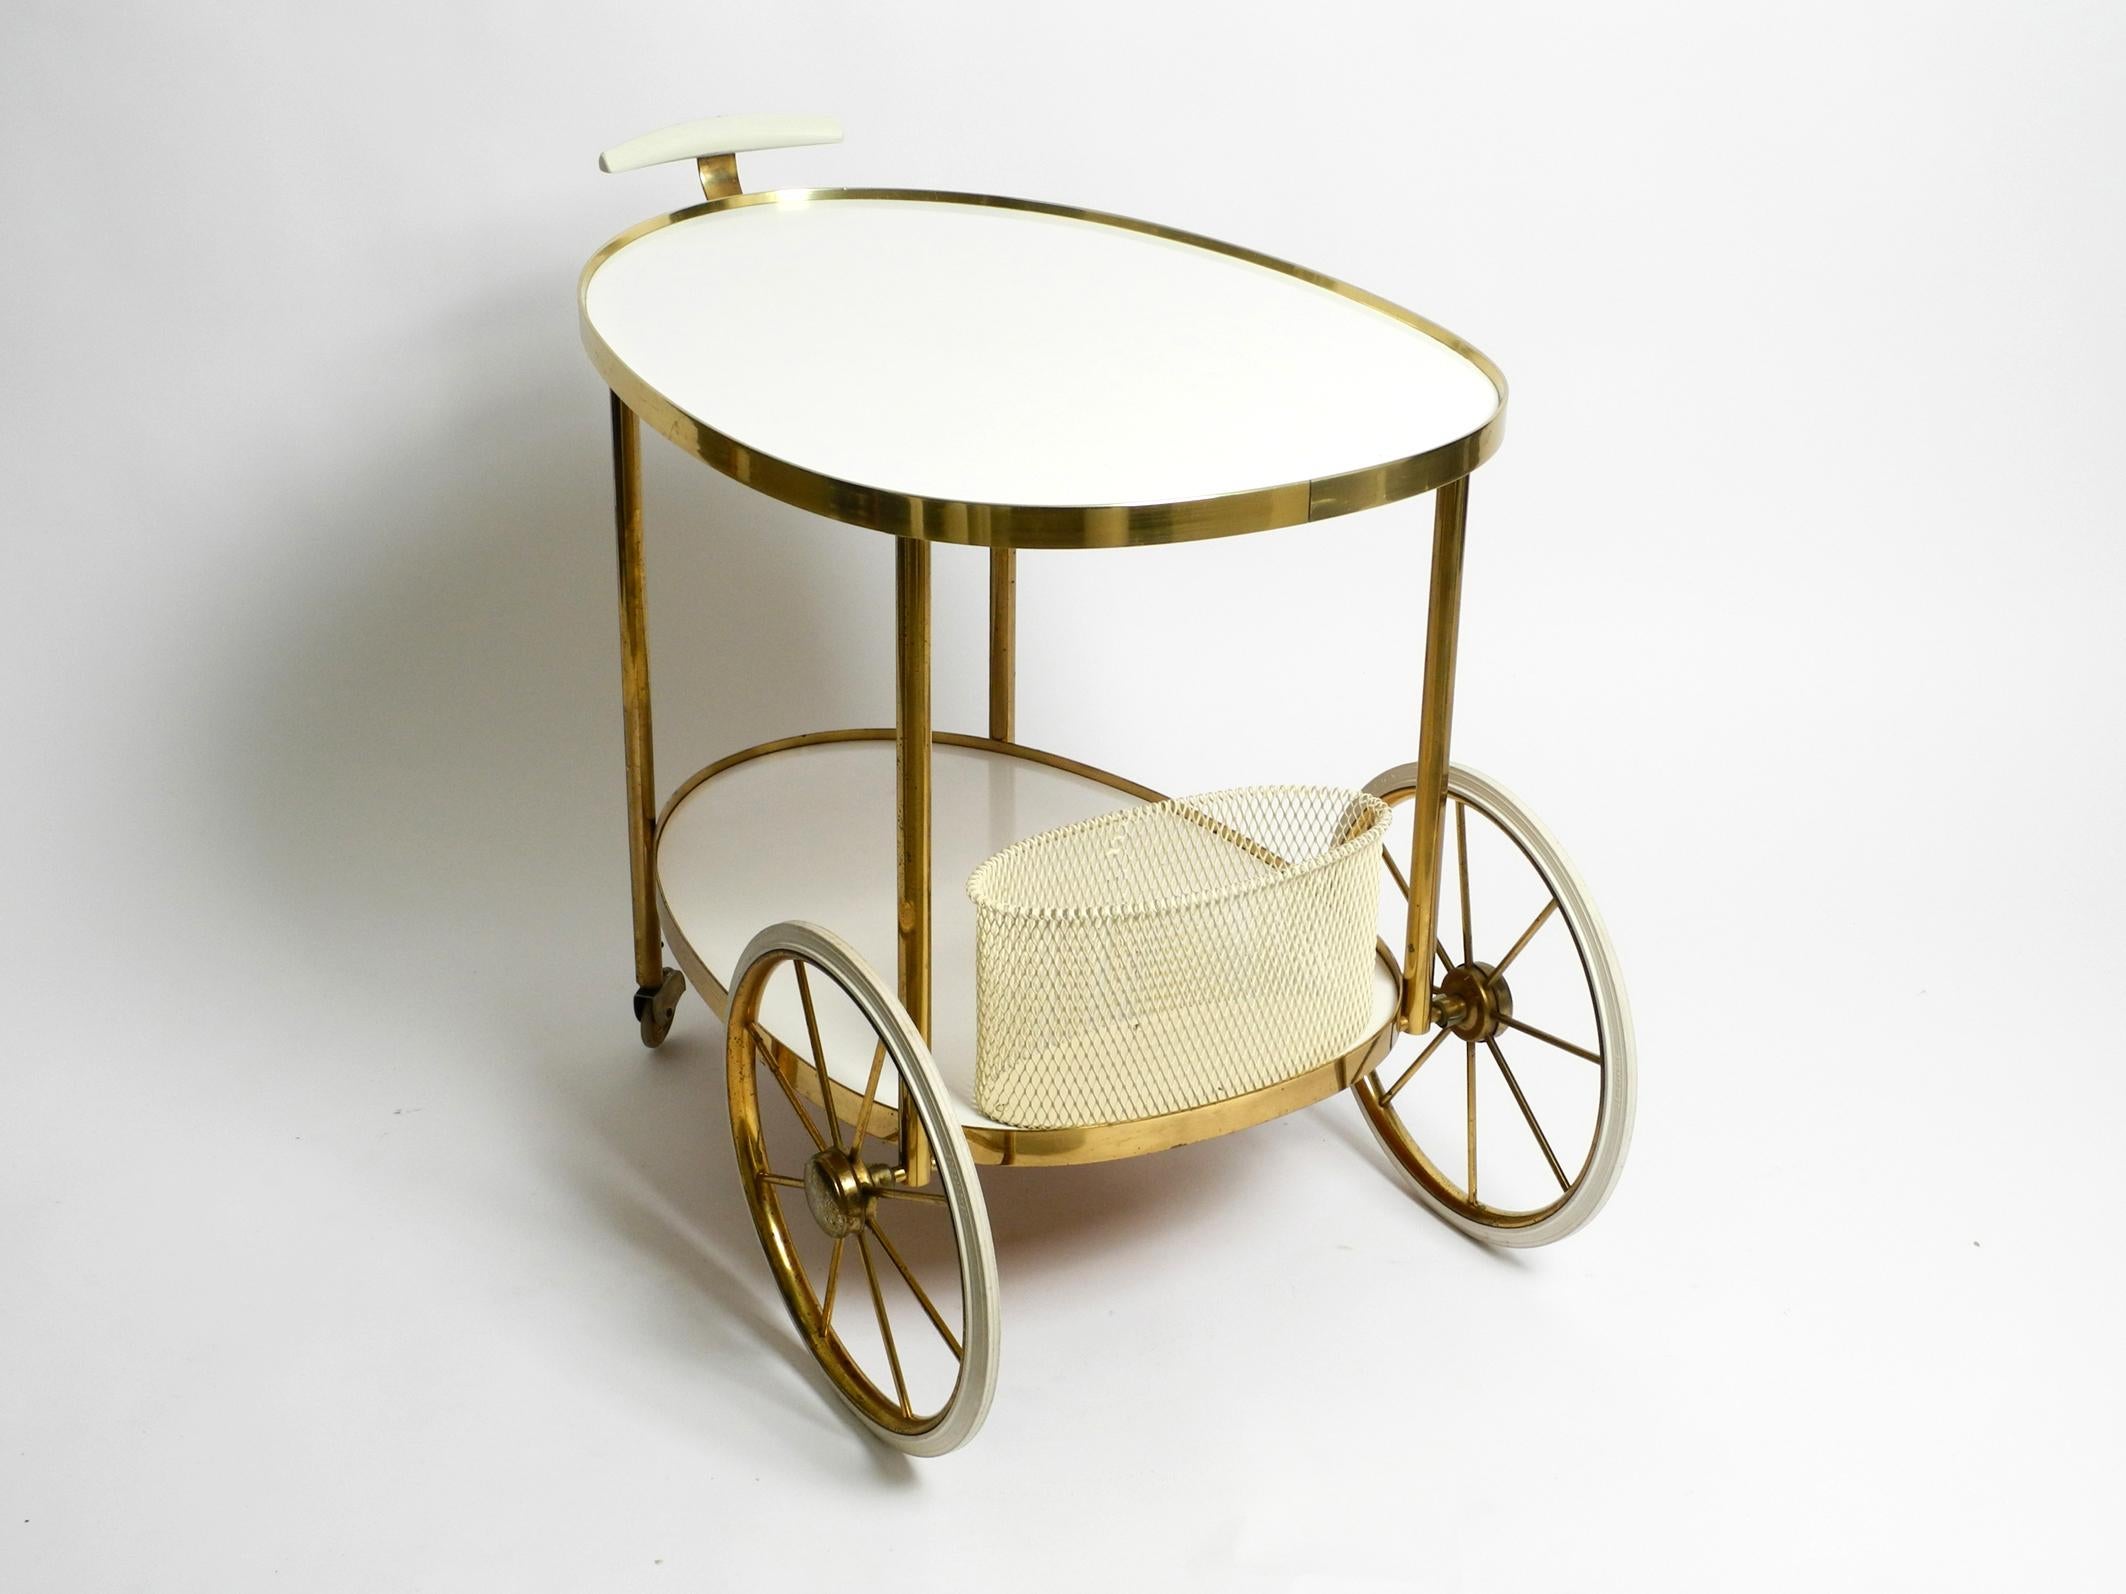 Mid Century brass and wood serving trolley or bar cart by Vereinigte Werkstätten In Good Condition For Sale In München, DE